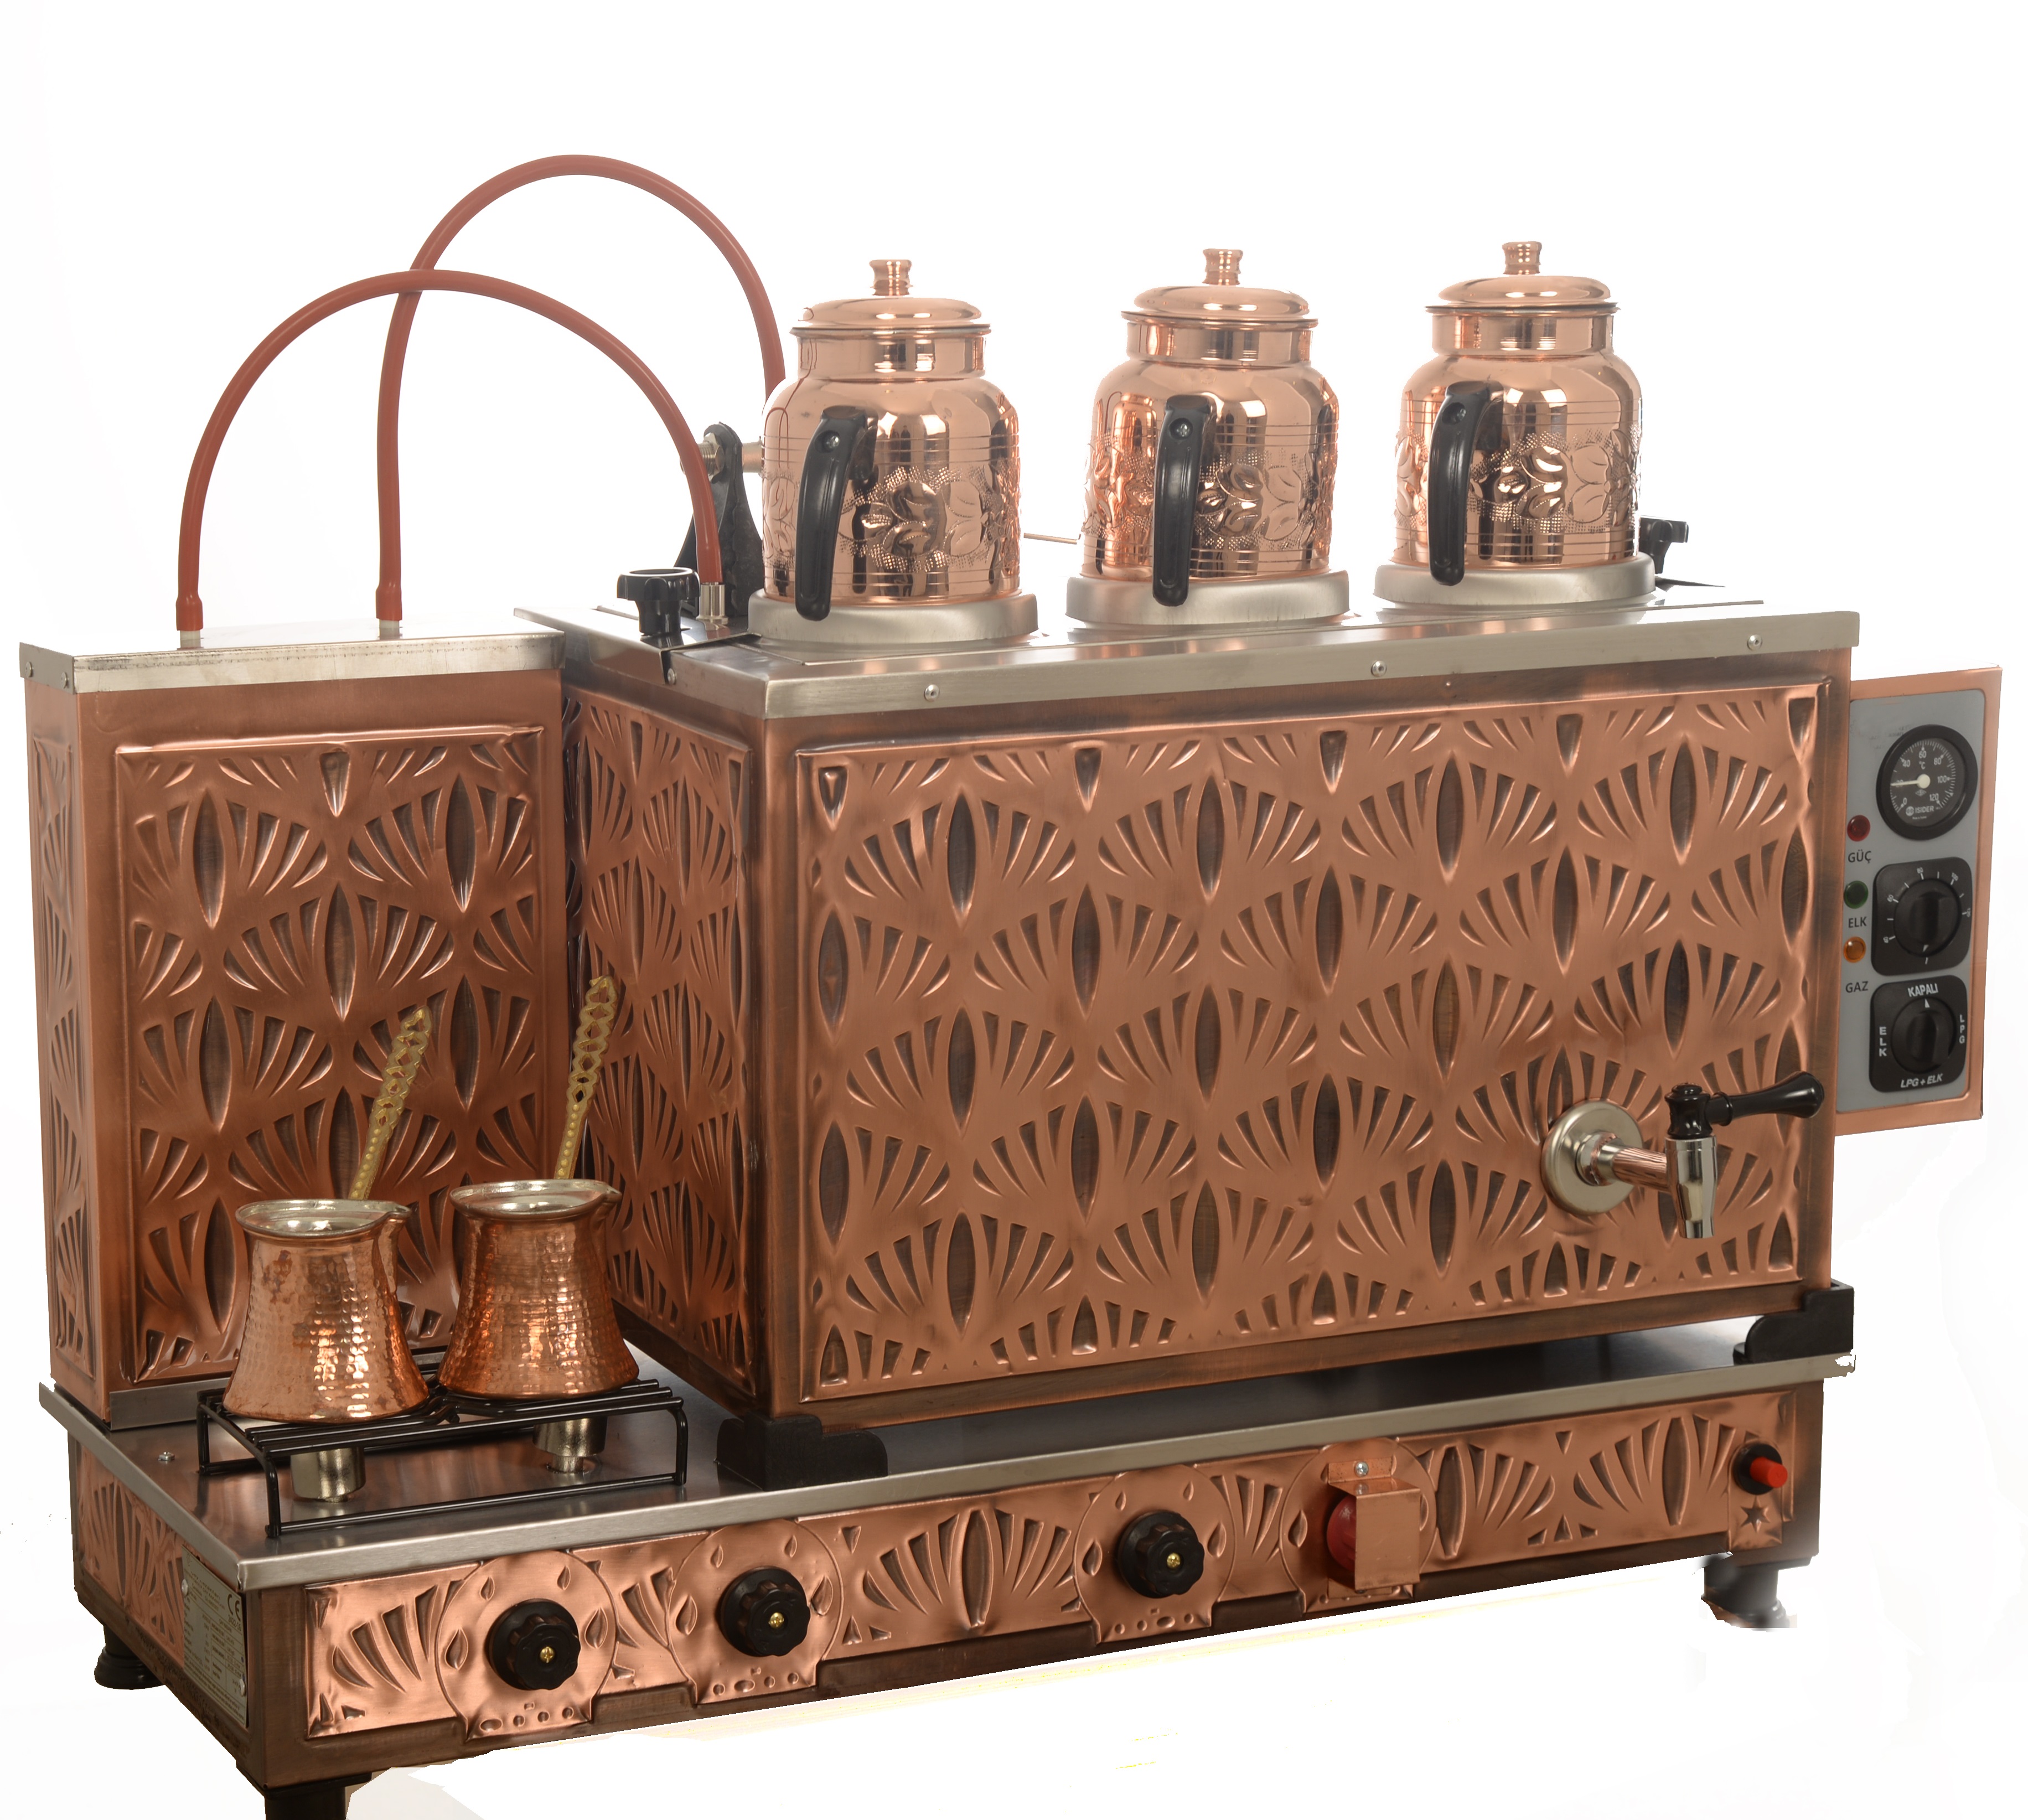 KUTLU | Professionel Tea Machine | Professionel Coffee Machine | Copper Coffee Maker | Copper Tea Maker | Coffee and Tea Maker